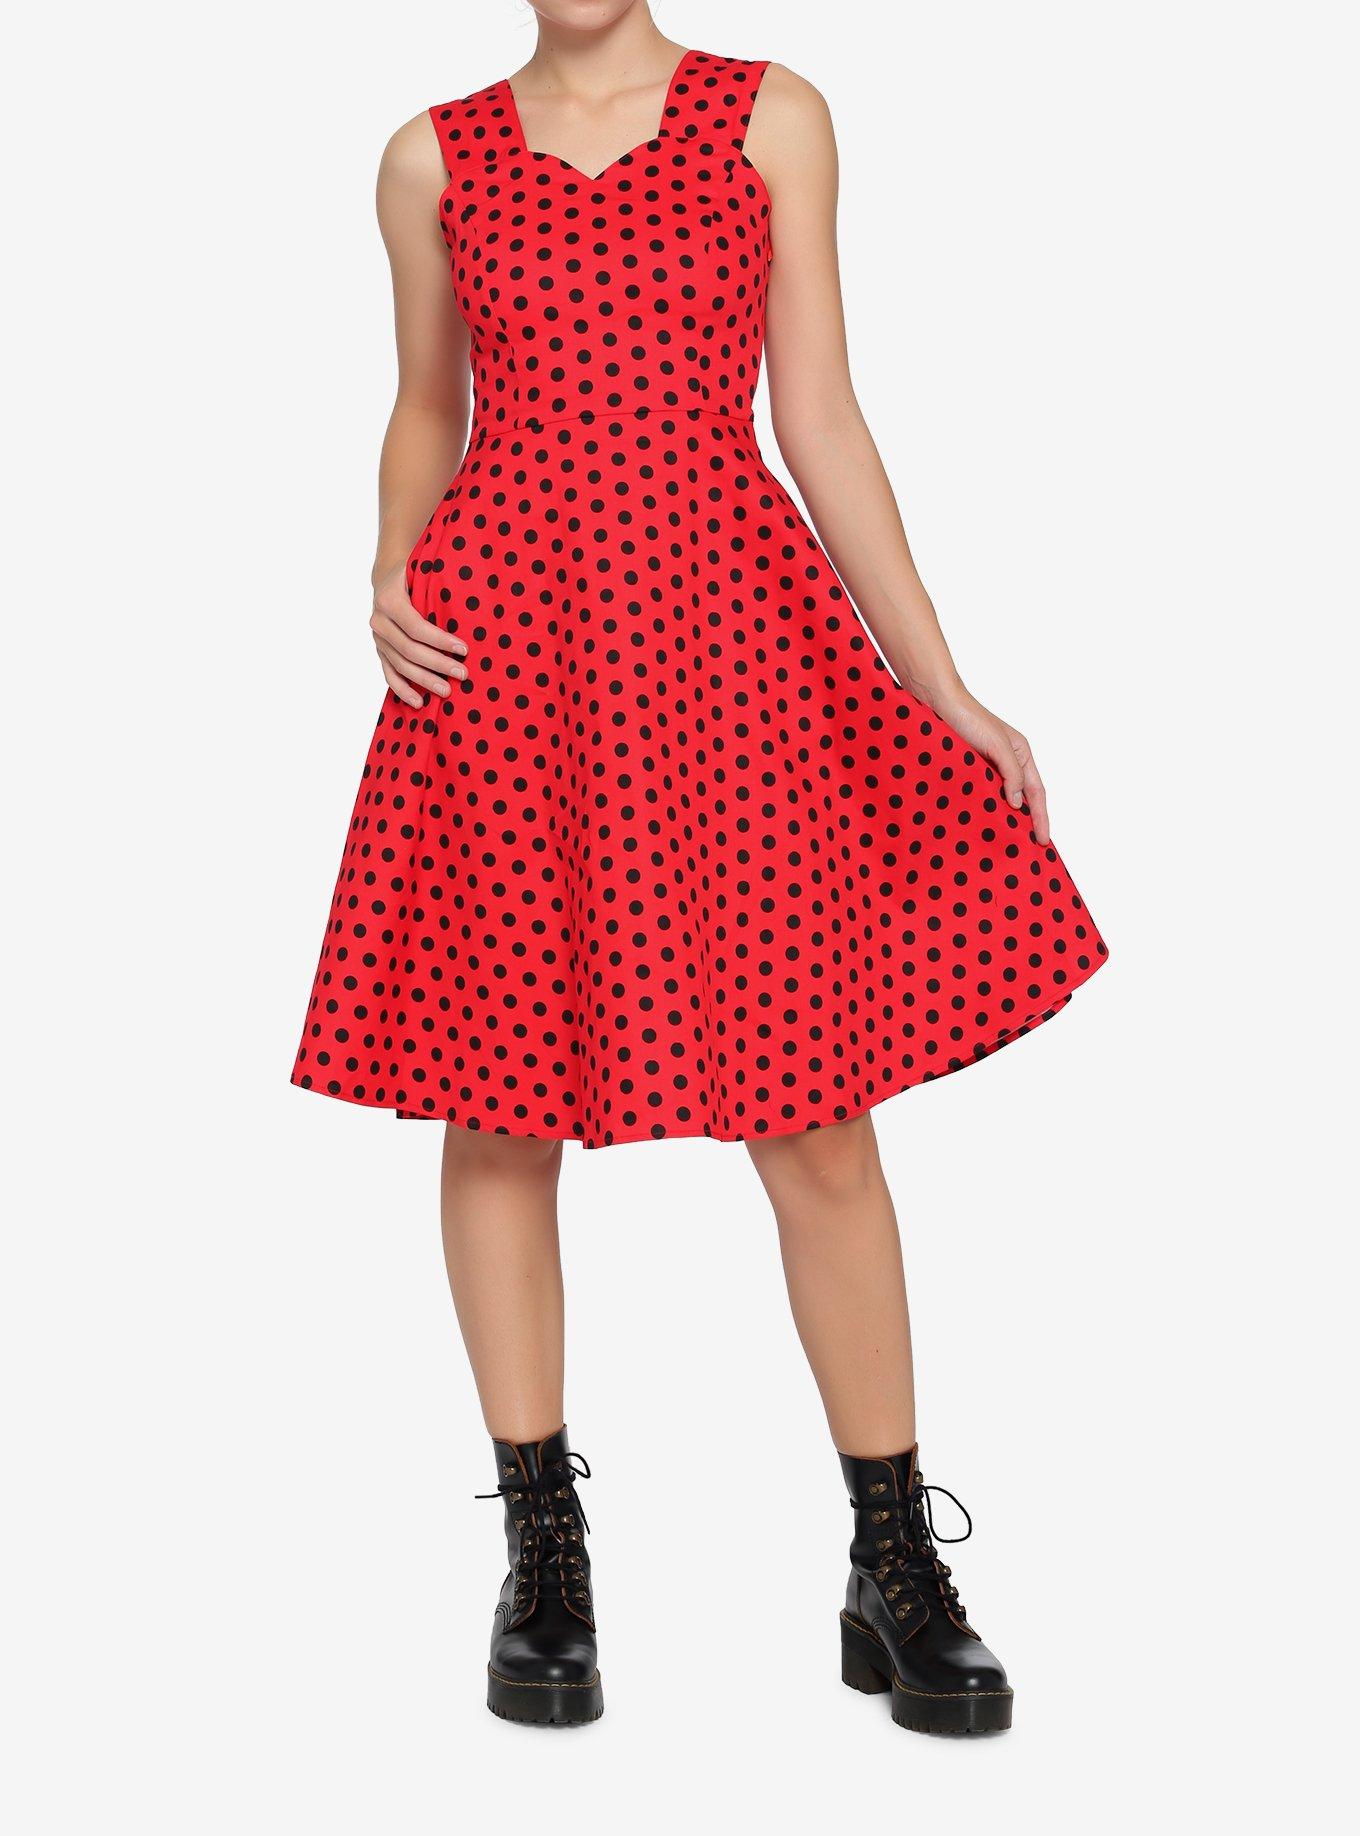 Red & Black Polka Dot Dress